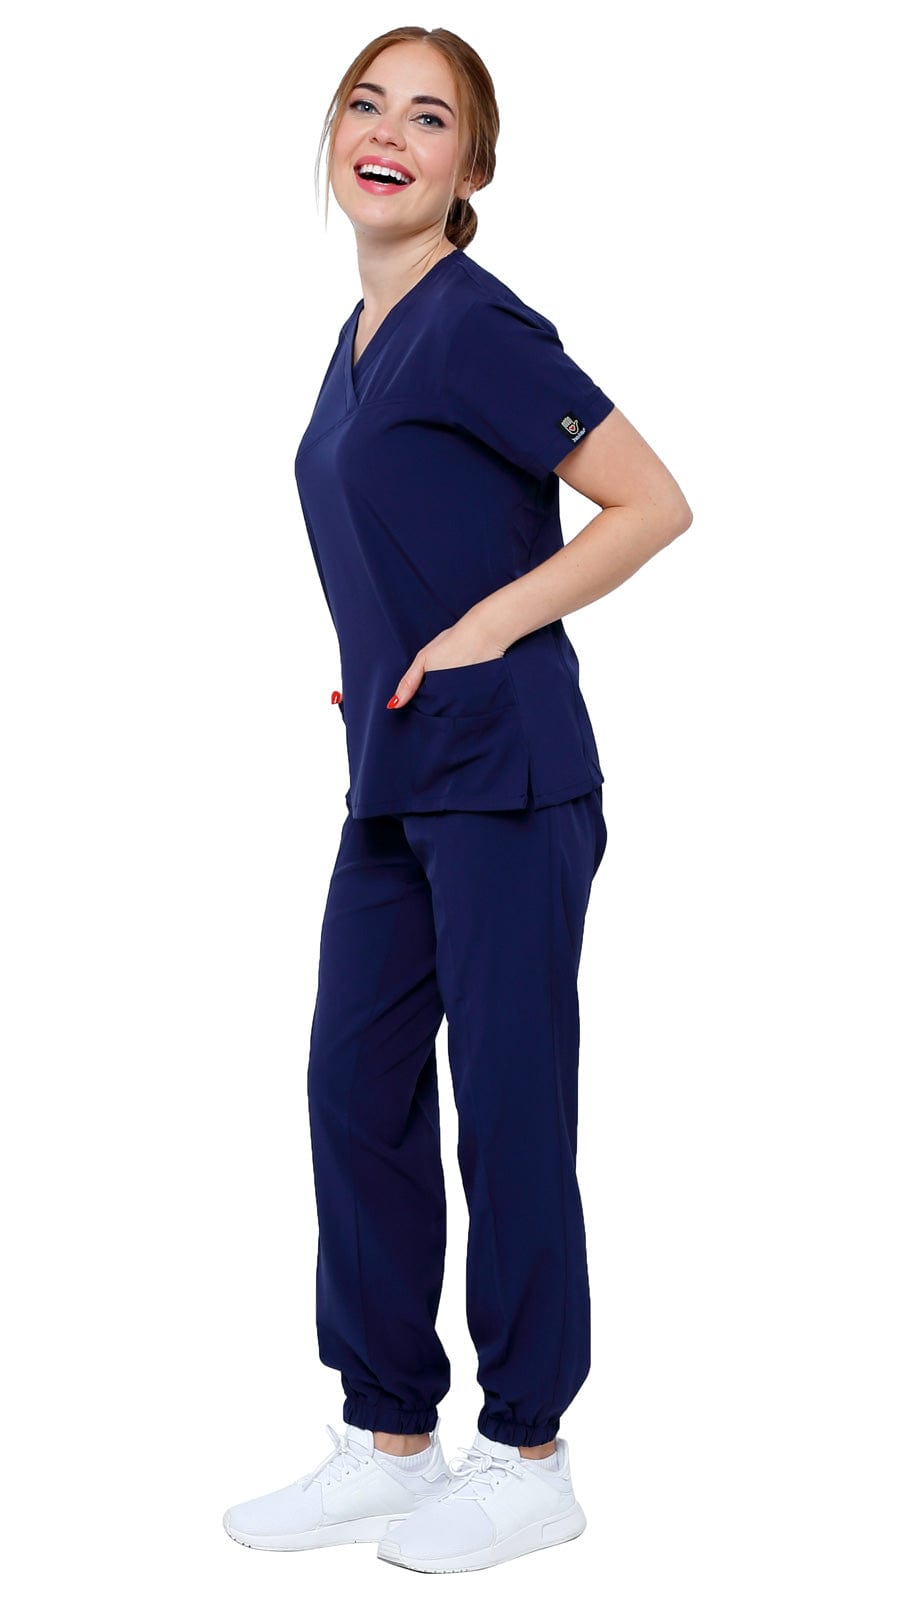 Dress A Med Women's Slim Fit 4 Way Stretch Jogger Scrubs